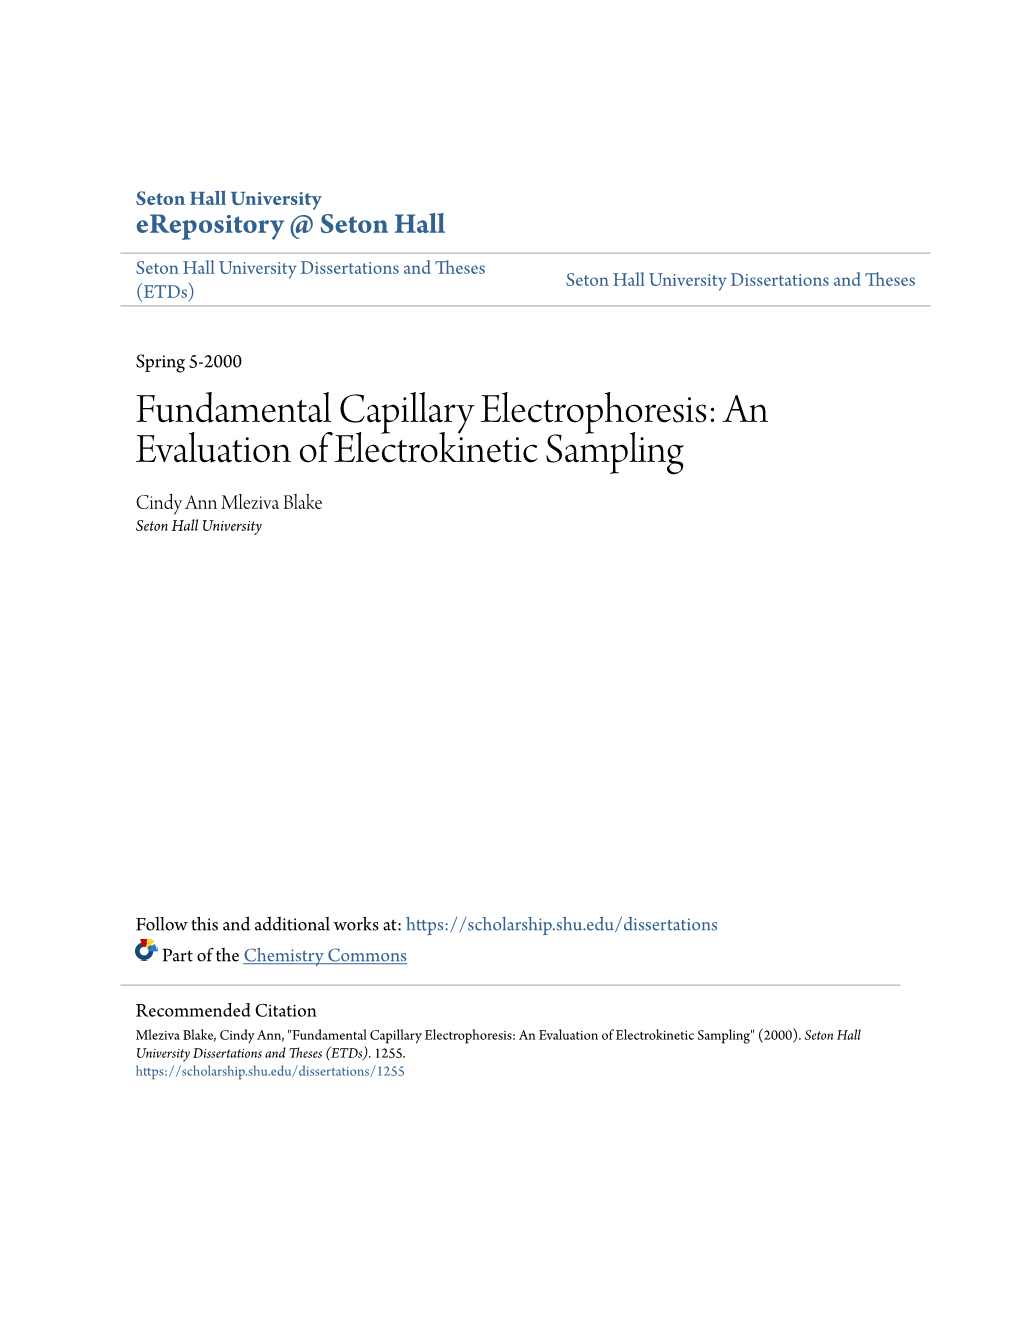 Fundamental Capillary Electrophoresis: an Evaluation of Electrokinetic Sampling Cindy Ann Mleziva Blake Seton Hall University